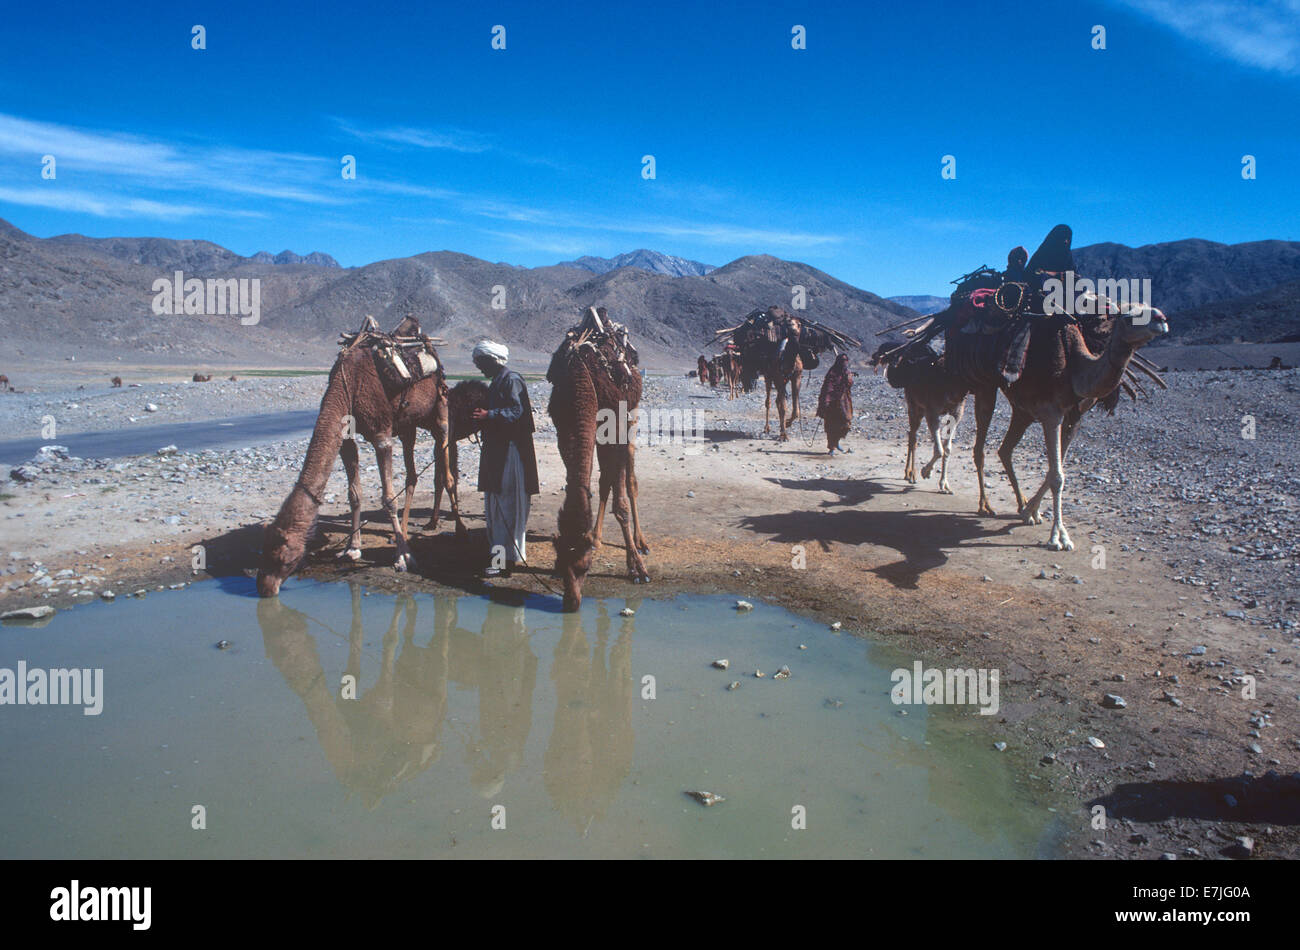 Los nómadas del desierto, Bolan Pass, Pakistán Foto de stock